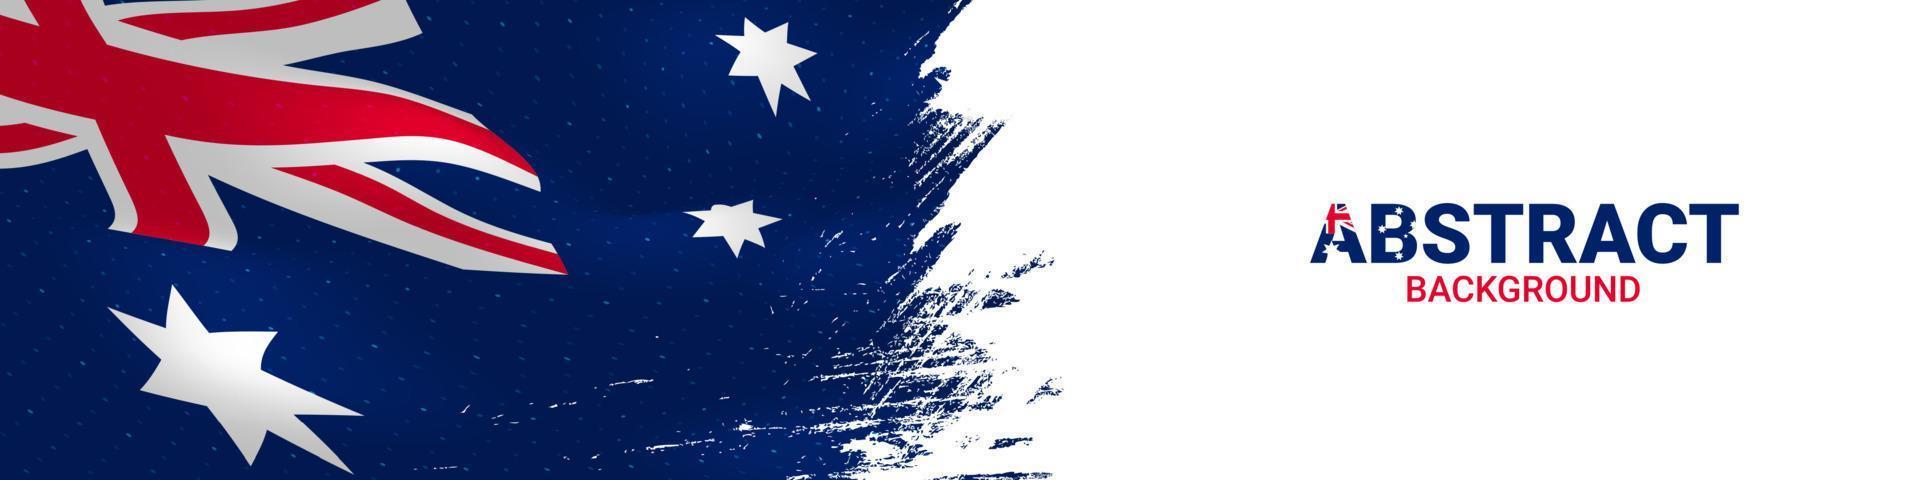 abstrakt baner bakgrund med hand målad borsta flagga av Australien på vit bakgrund vektor